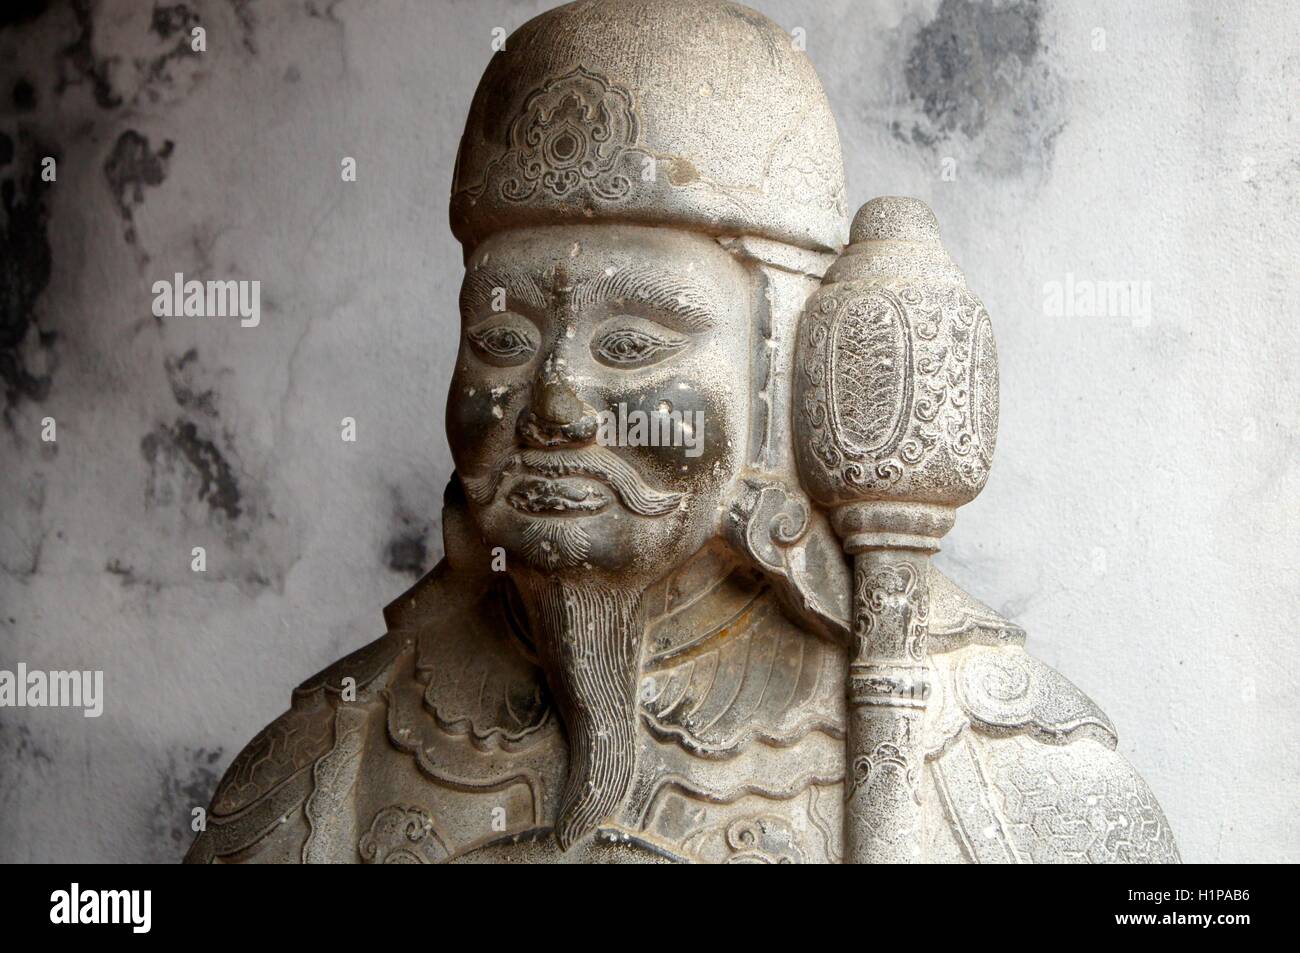 Guard statue at the Temple of Literature in Hanoi, Vietnam Stock Photo